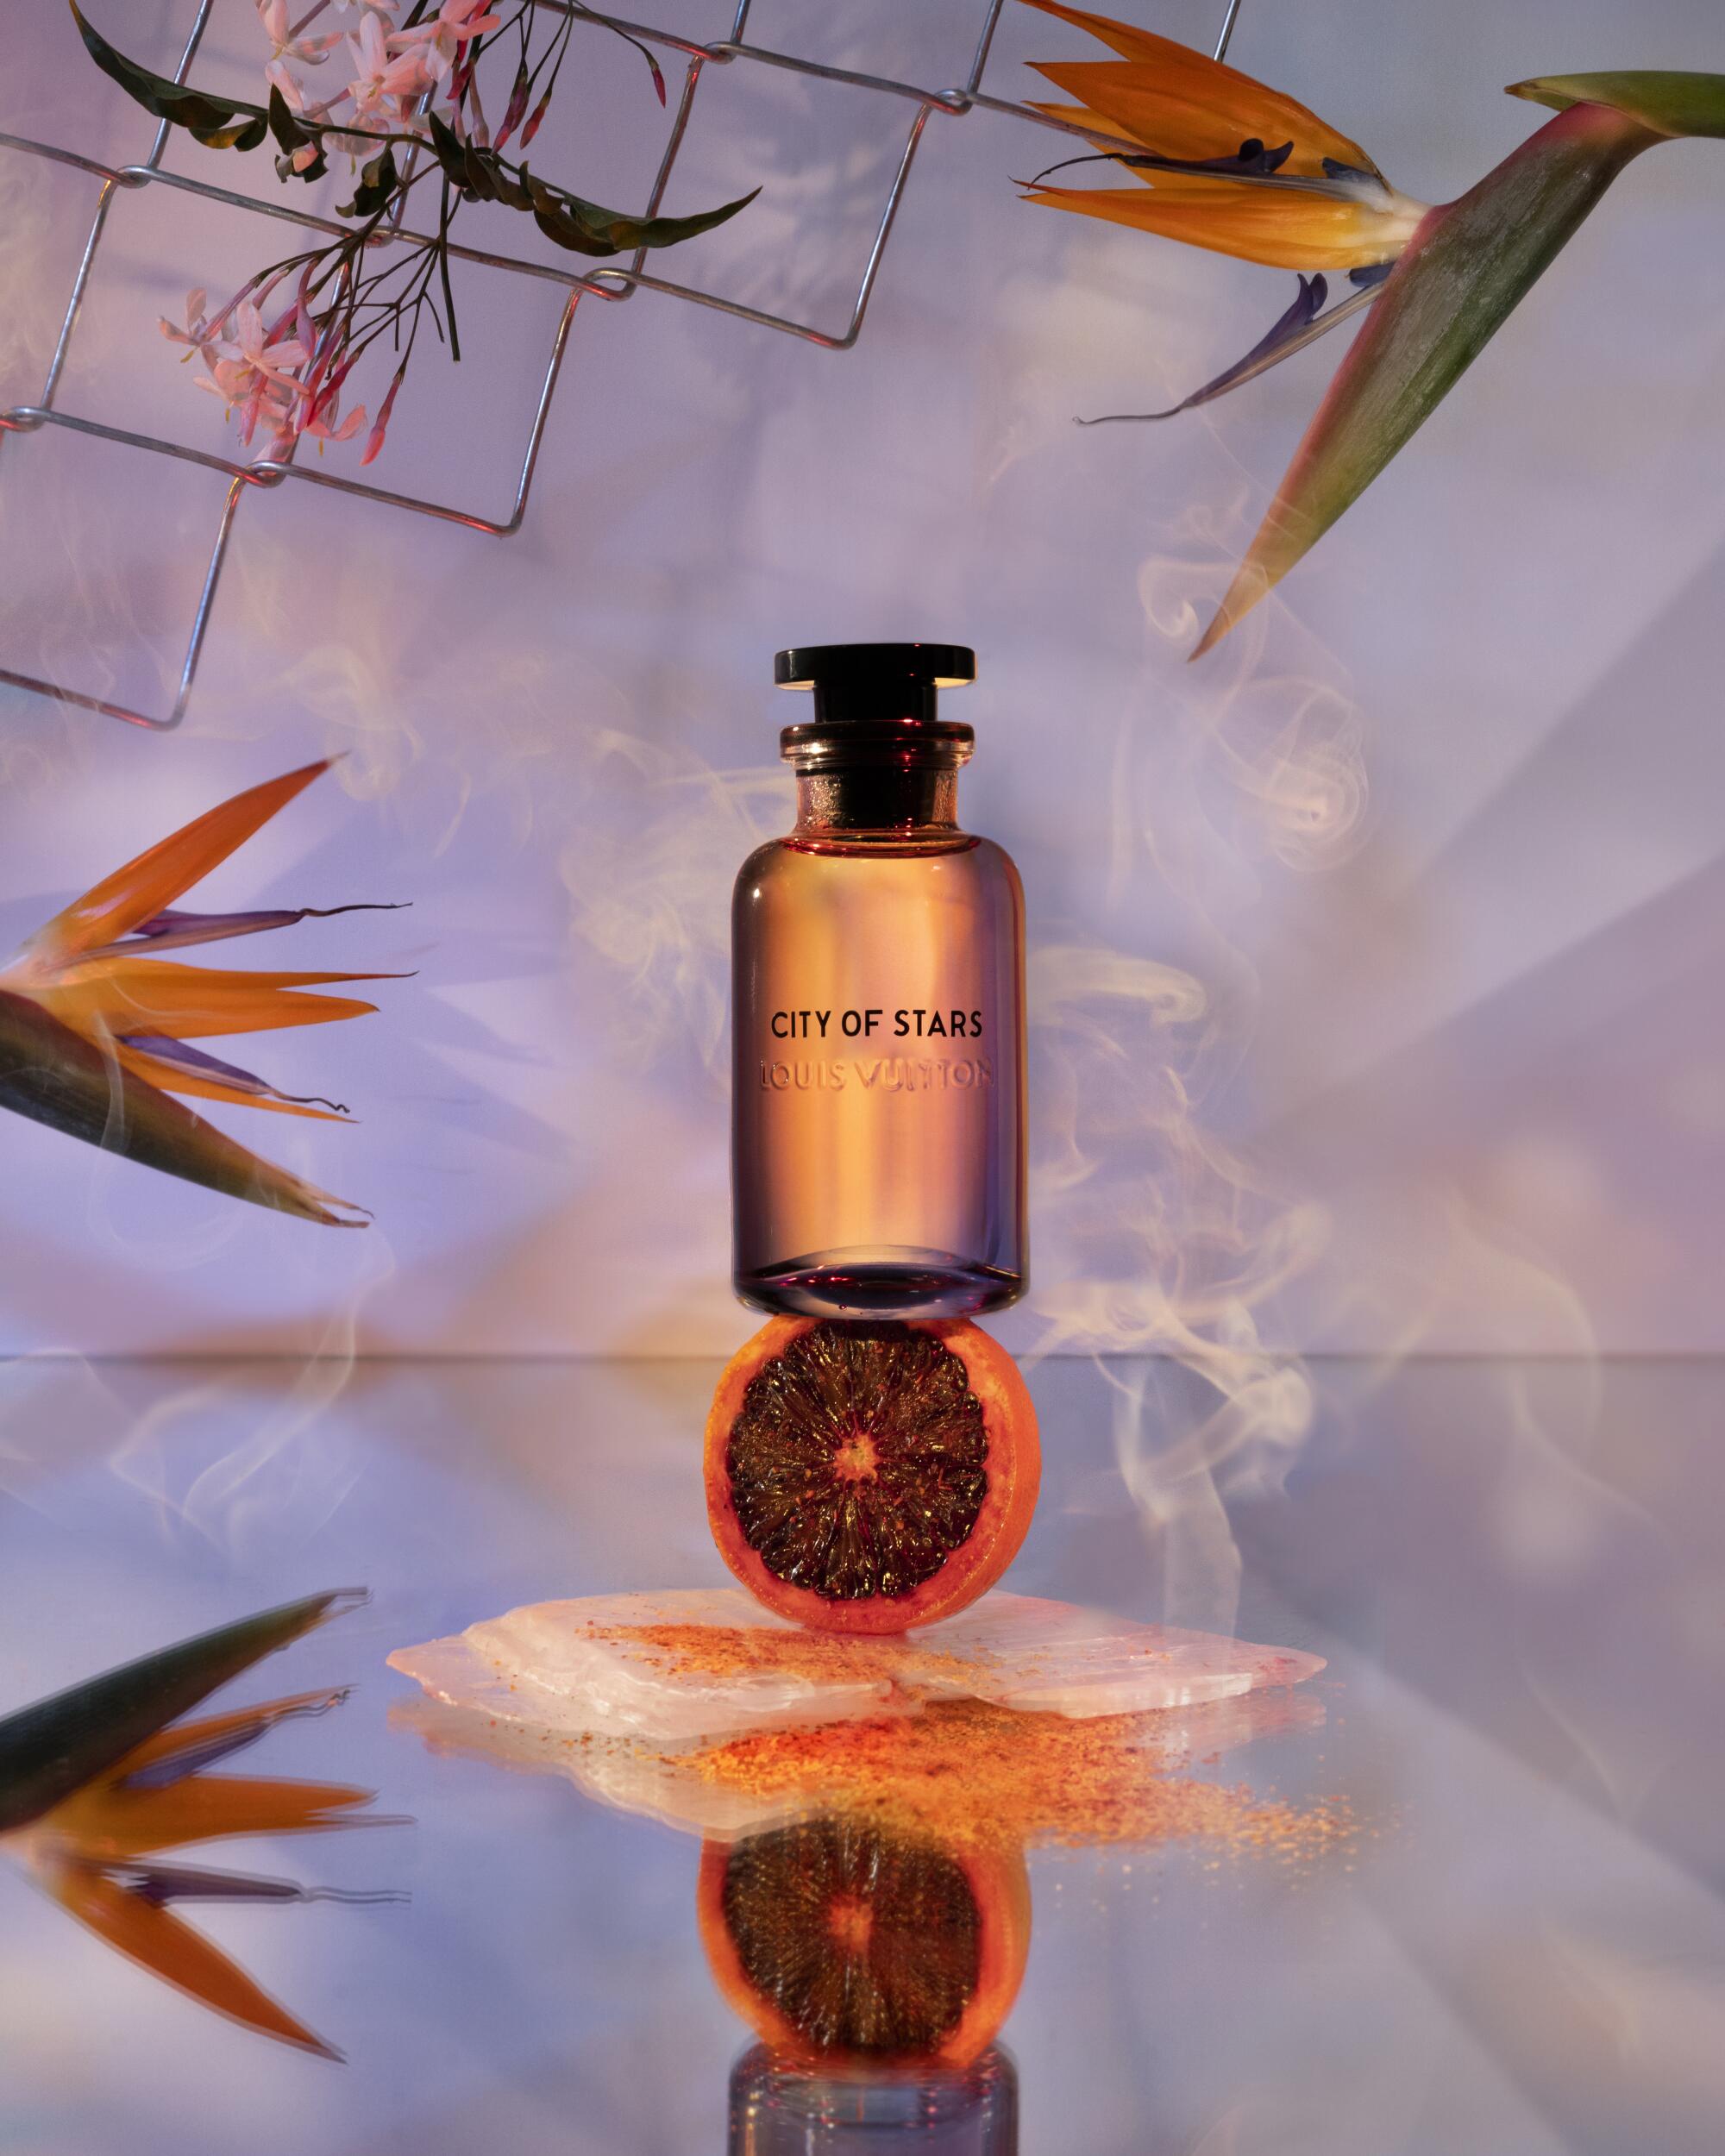 Louis Vuitton Introduces California Dream Cologne Perfume